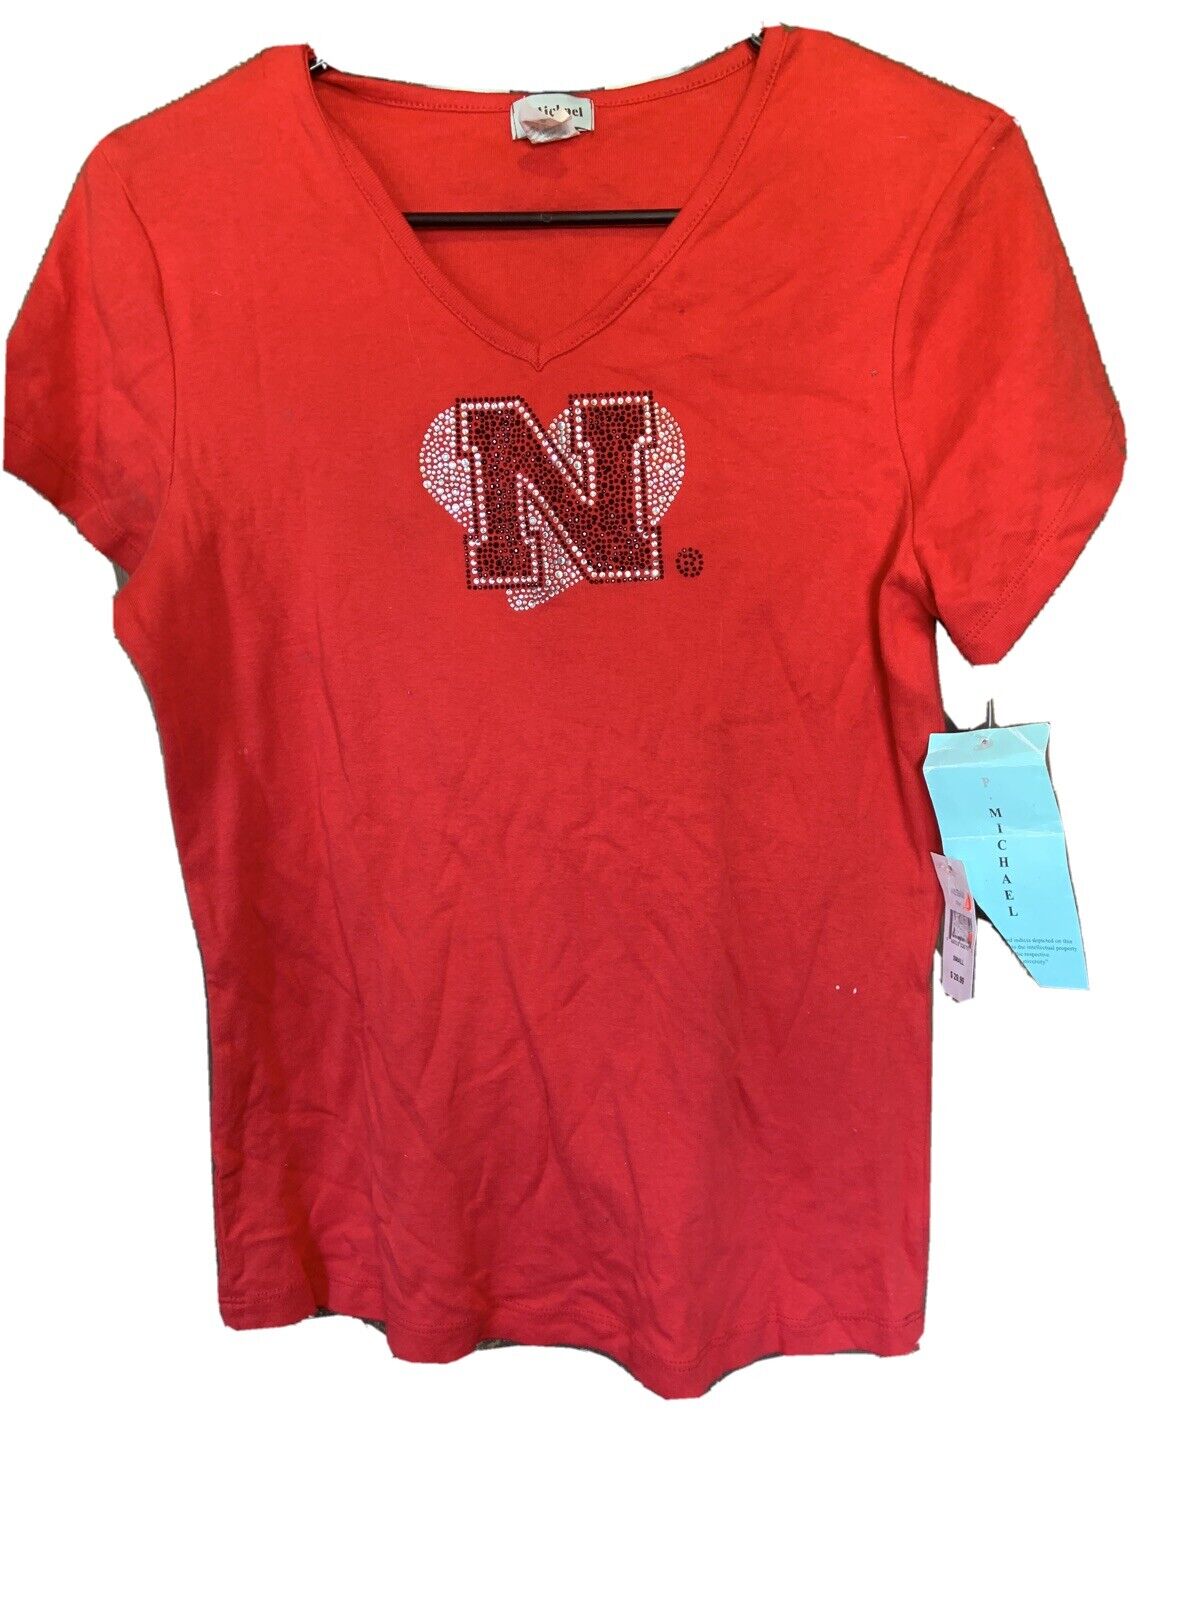 Vintage Women’s Nebraska Love Shirt W/hearts Size Small By P. Michael NWT Bling